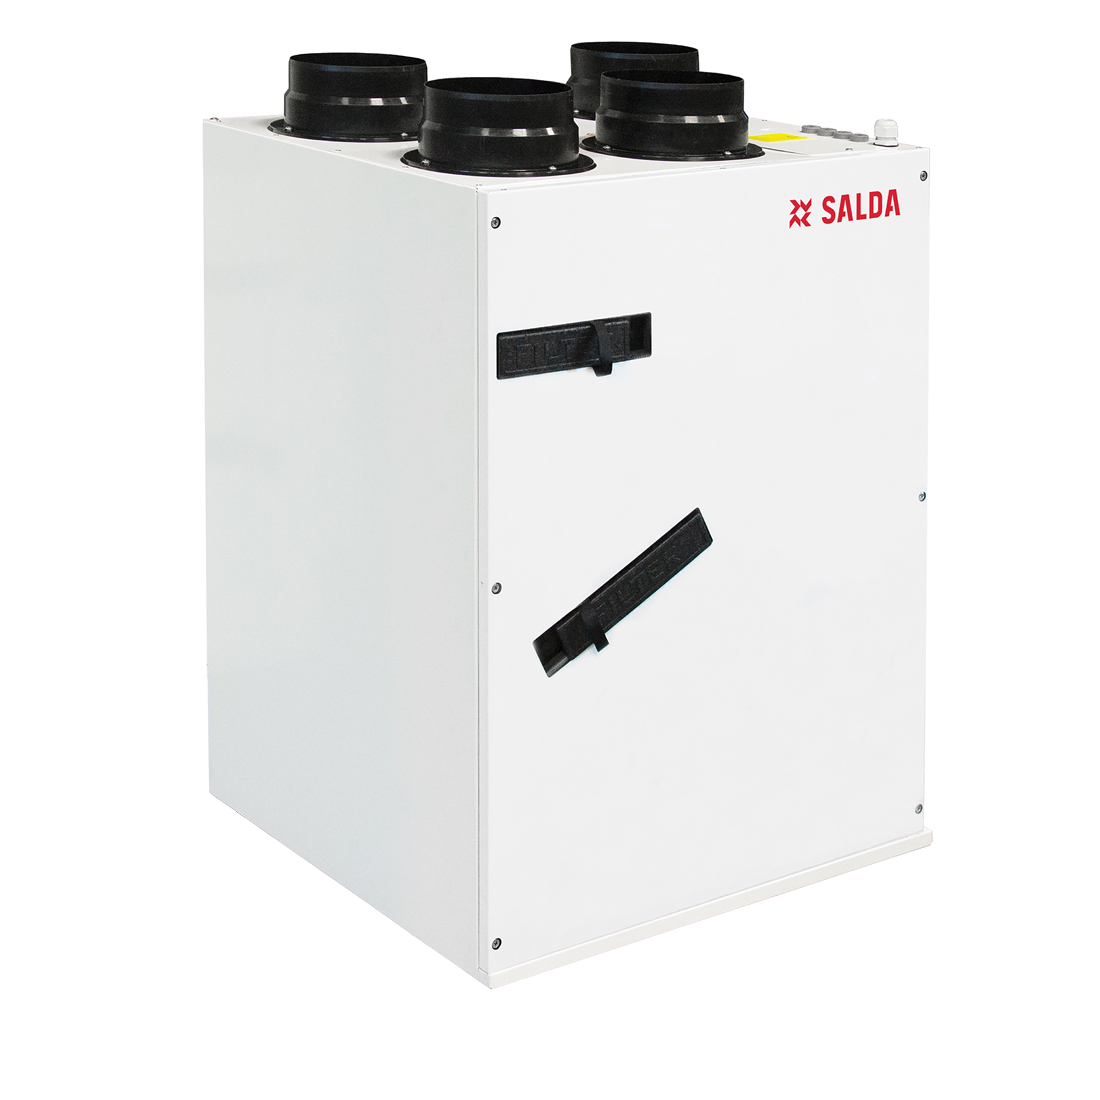 Salda Smarty 3X V 1.1 Heat Recovery System - AHU000114